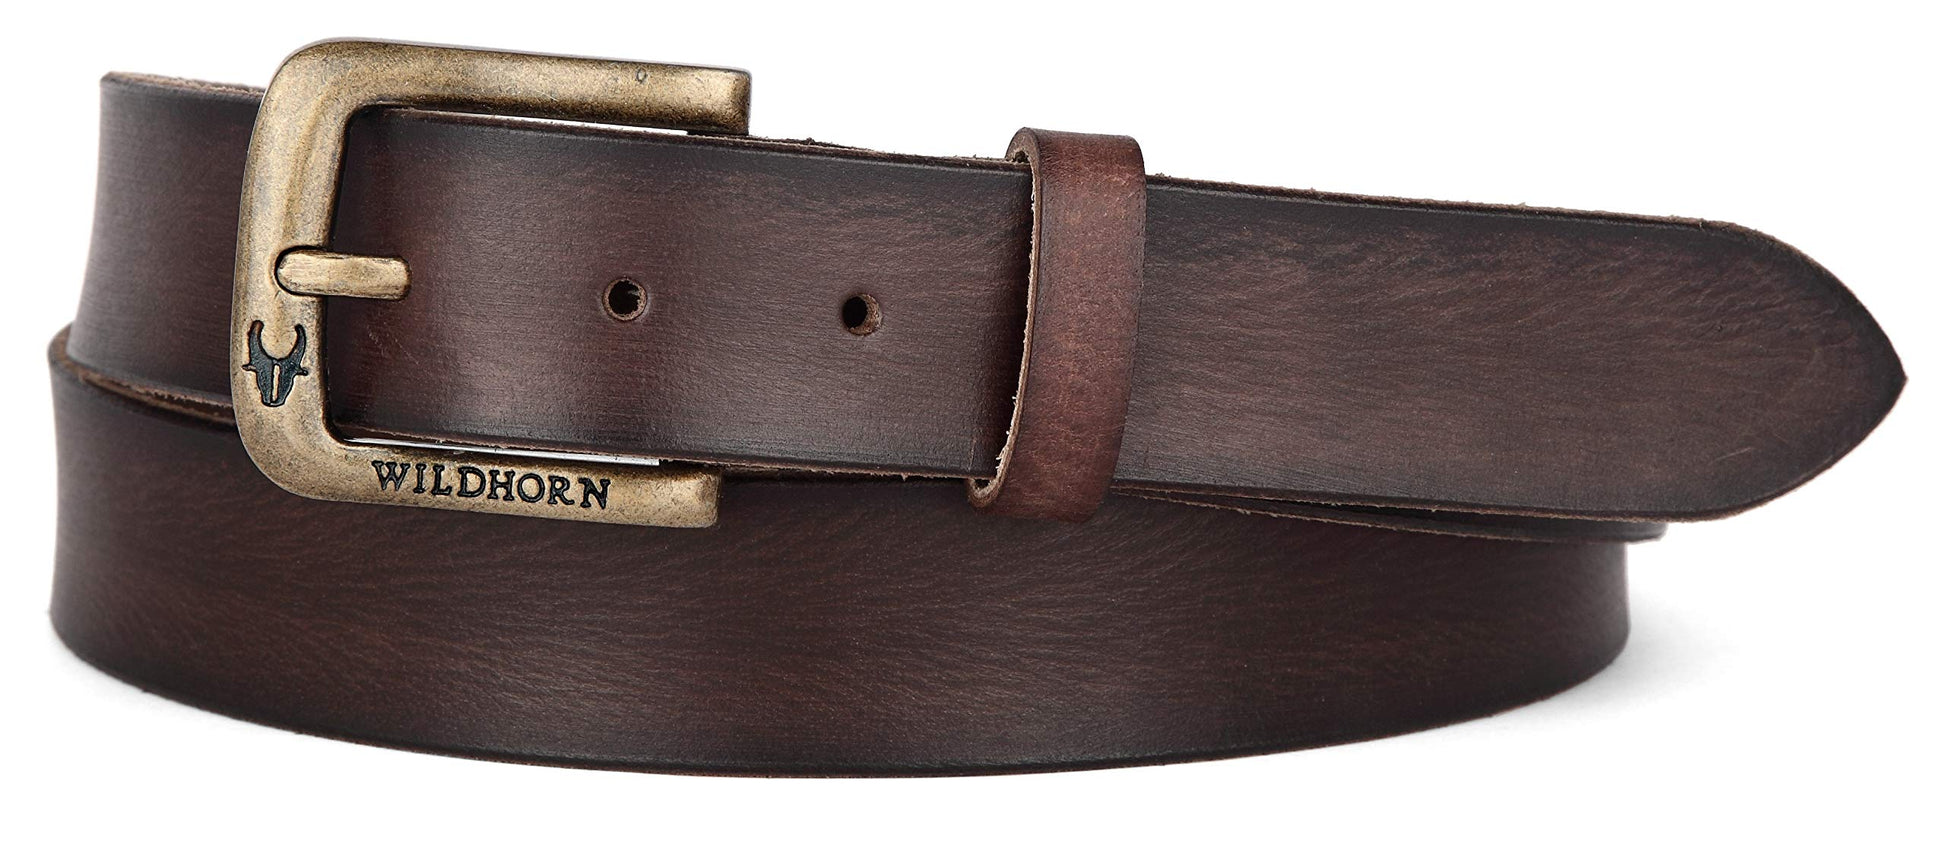 WildHorn Gift Hamper for Men I Leather Wallet & Belt Combo Gift Set I Gift for Friend, Boyfriend,Husband,Father, Son etc (New Bombay Brown) - Blossom Mantra